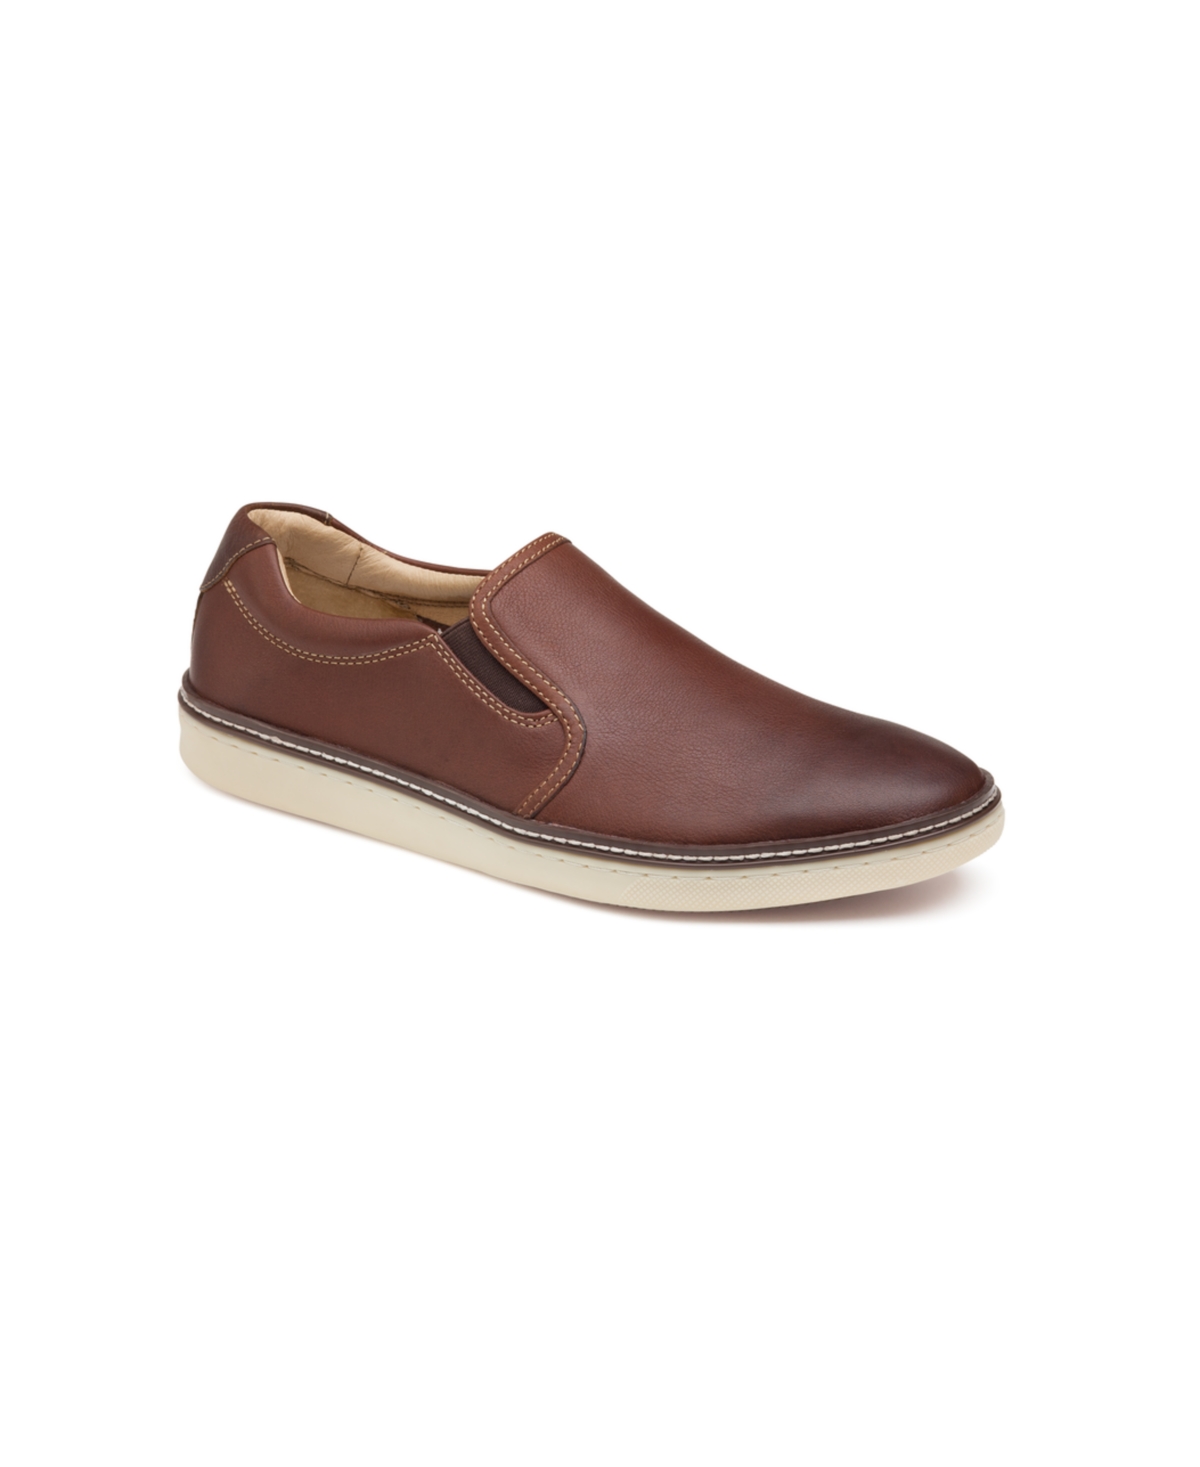 Men's McGuffey Slip-On Casual Shoes - Dark Brown Full Grain